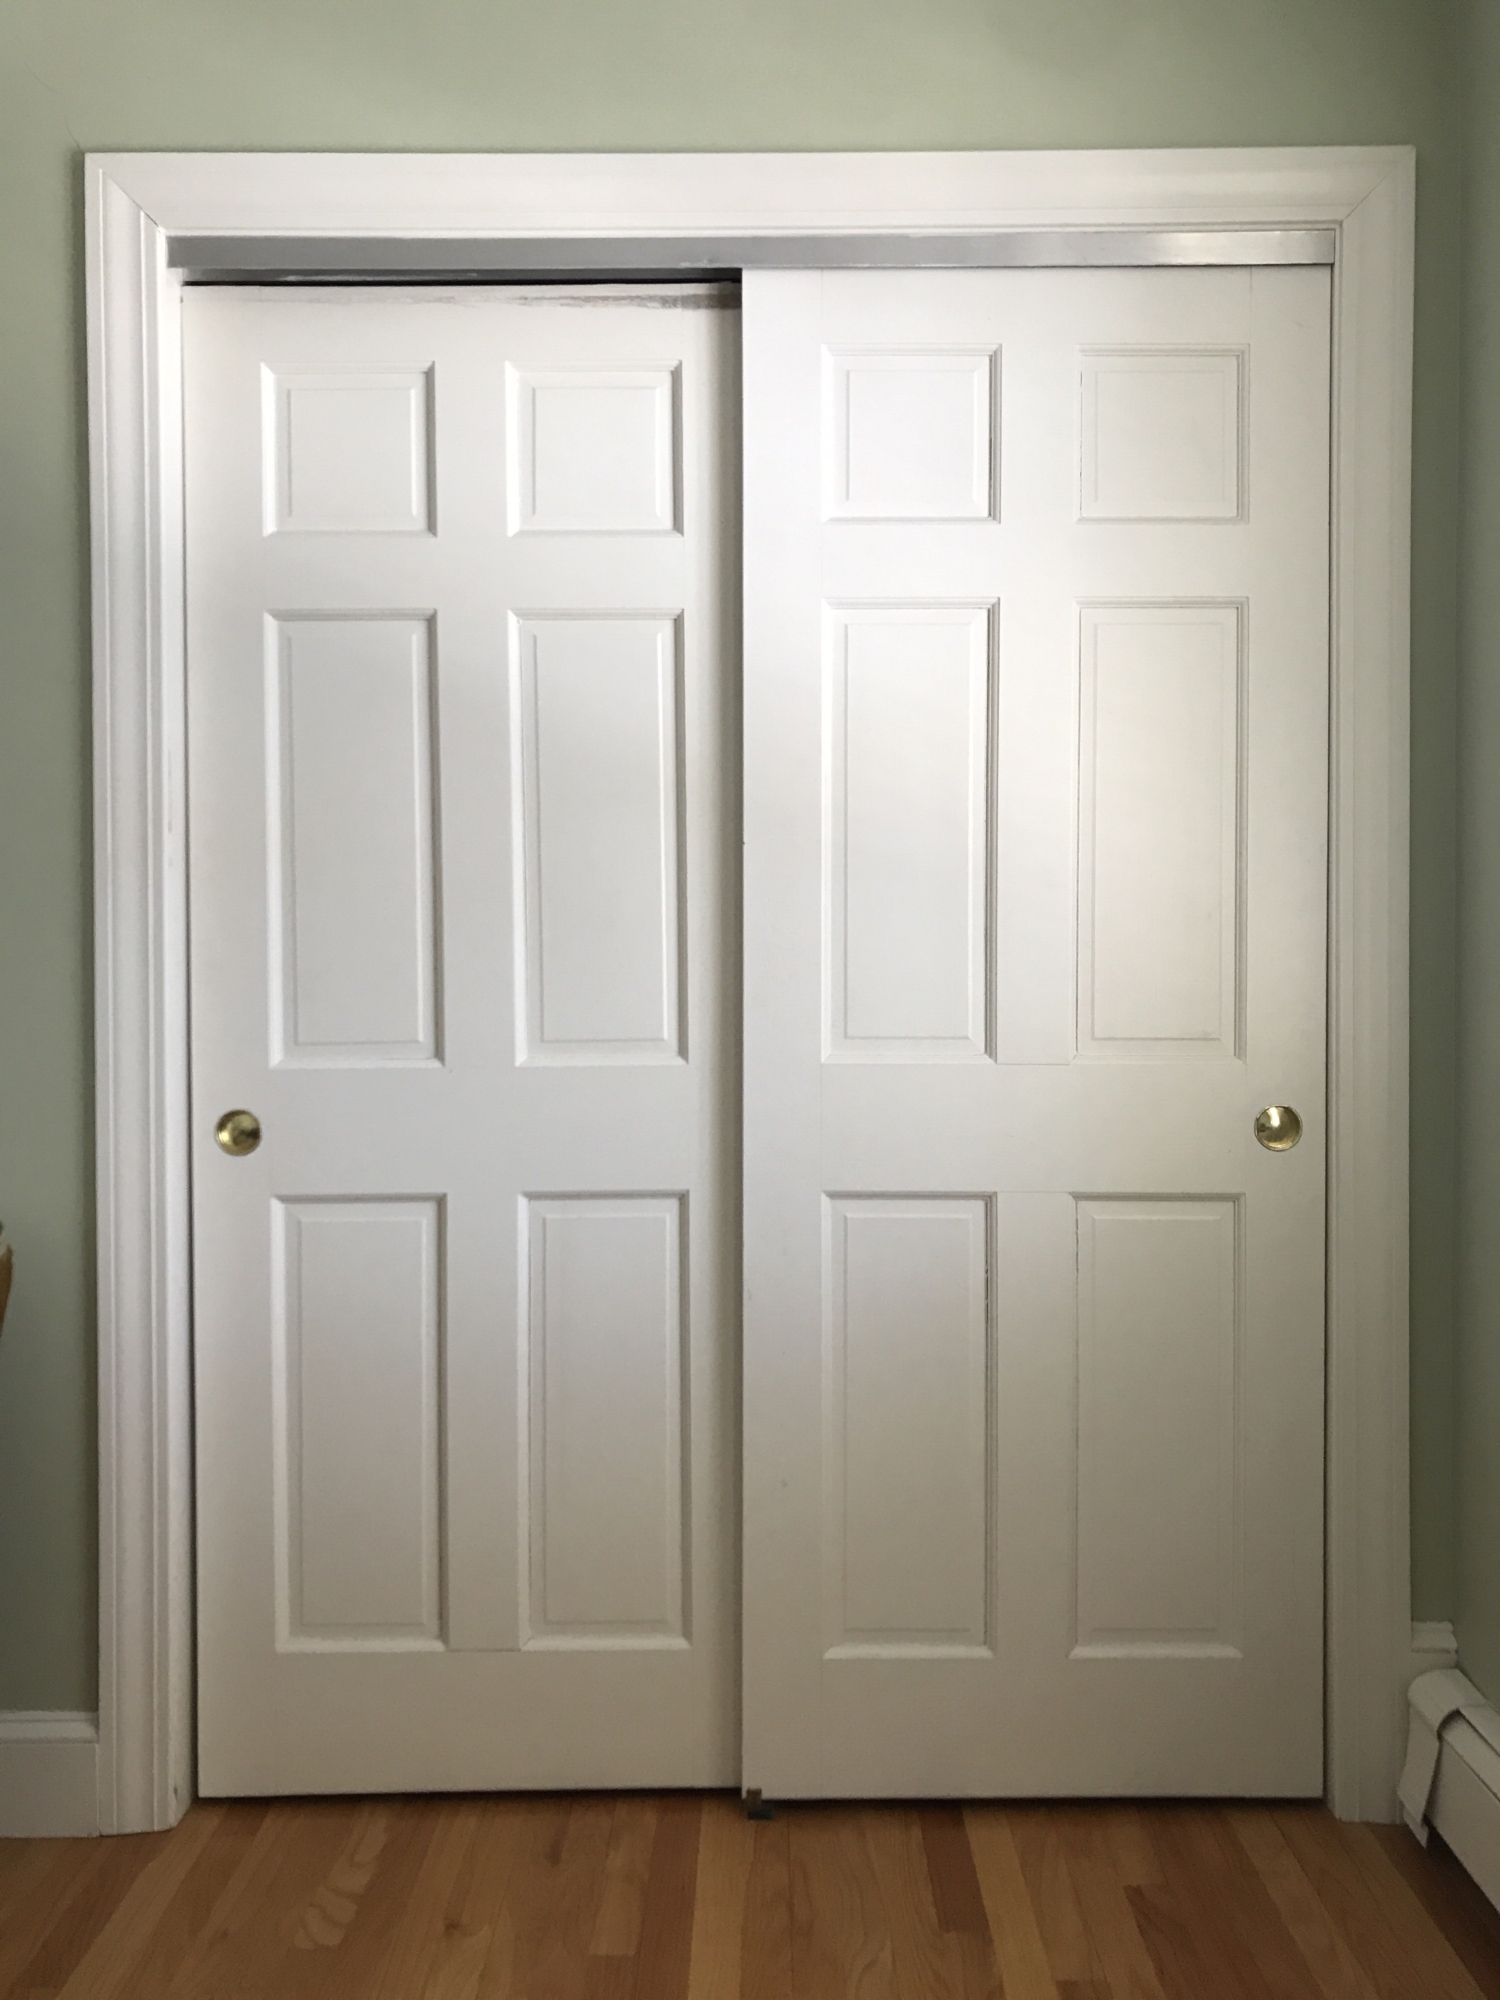 How To Convert Sliding Doors Hinged, How To Install Hanging Mirror Closet Doors